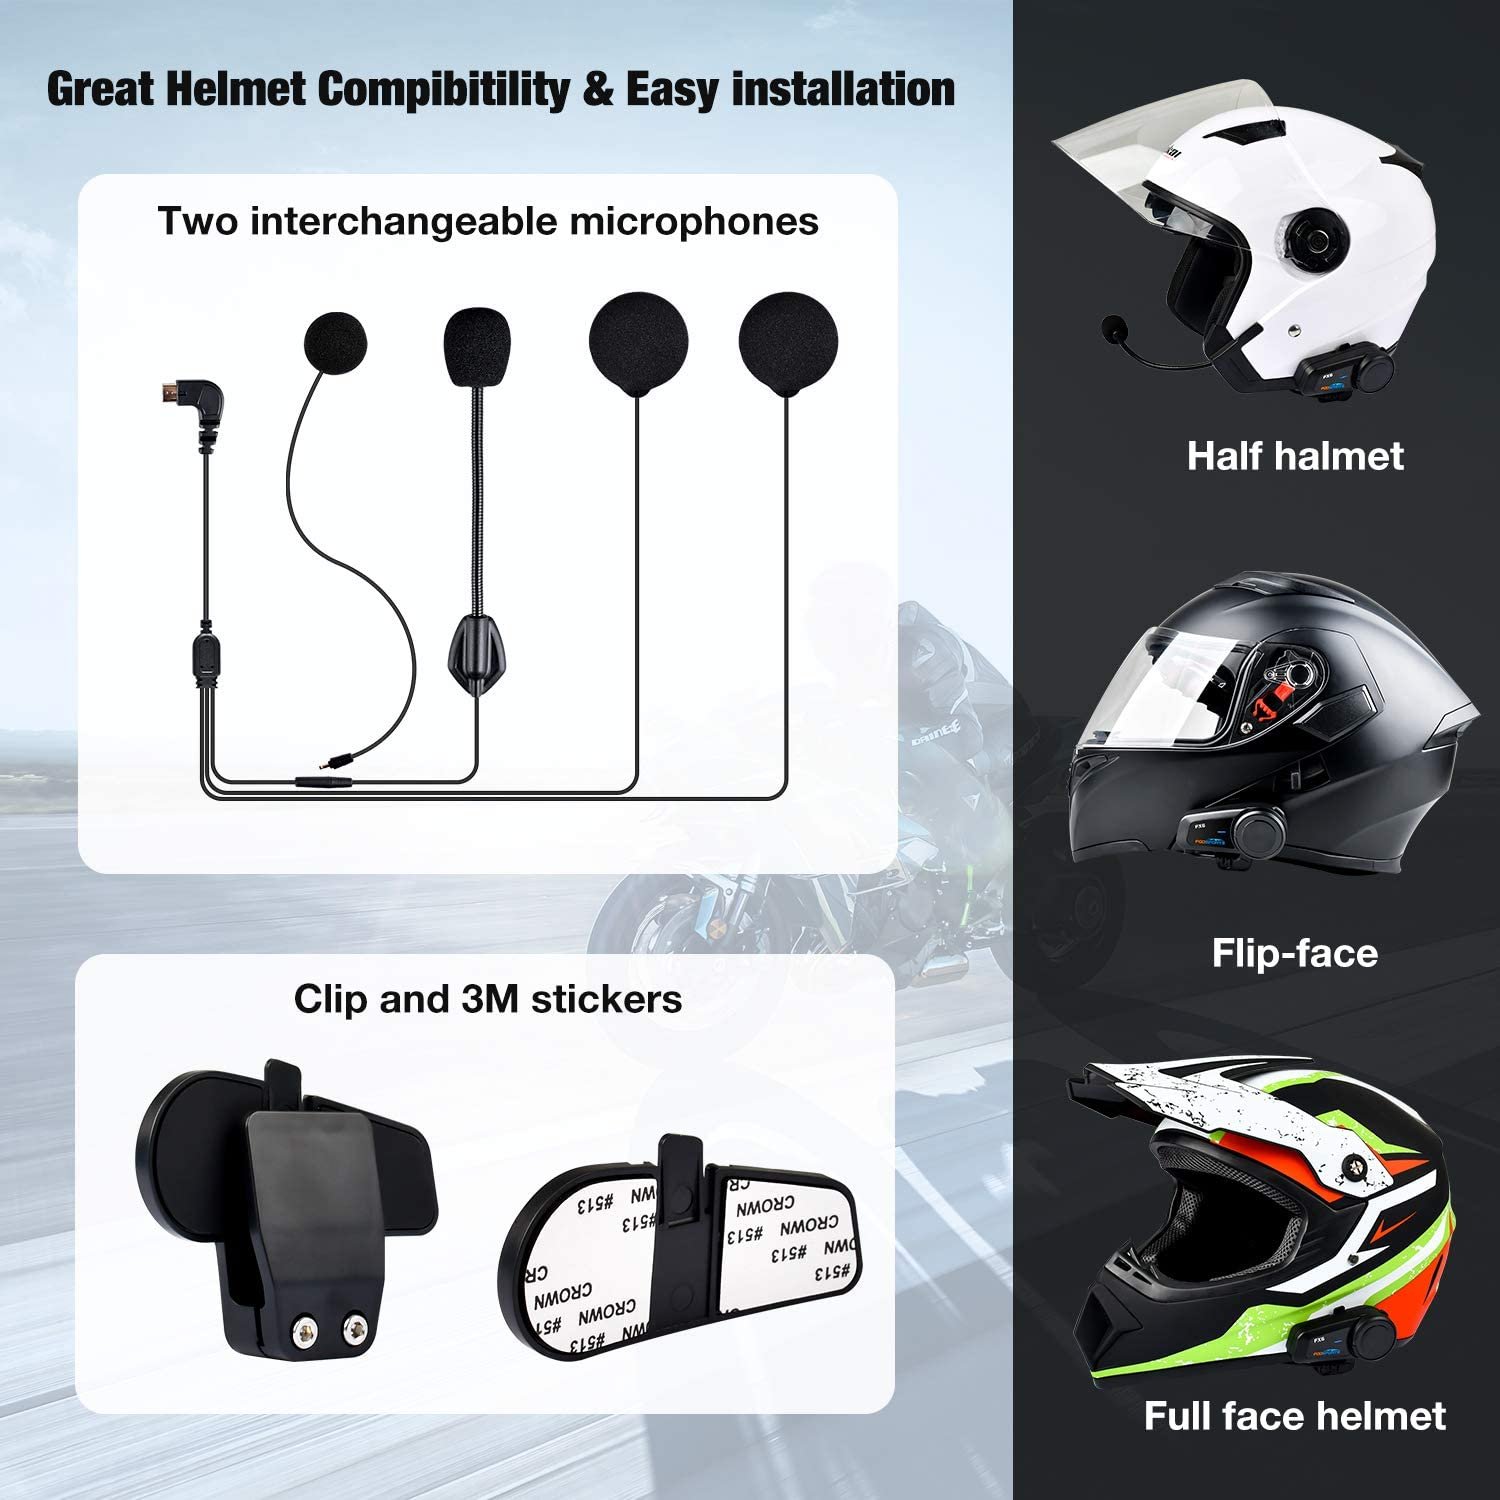 FX6 Intercom Helmet Headset Communication System